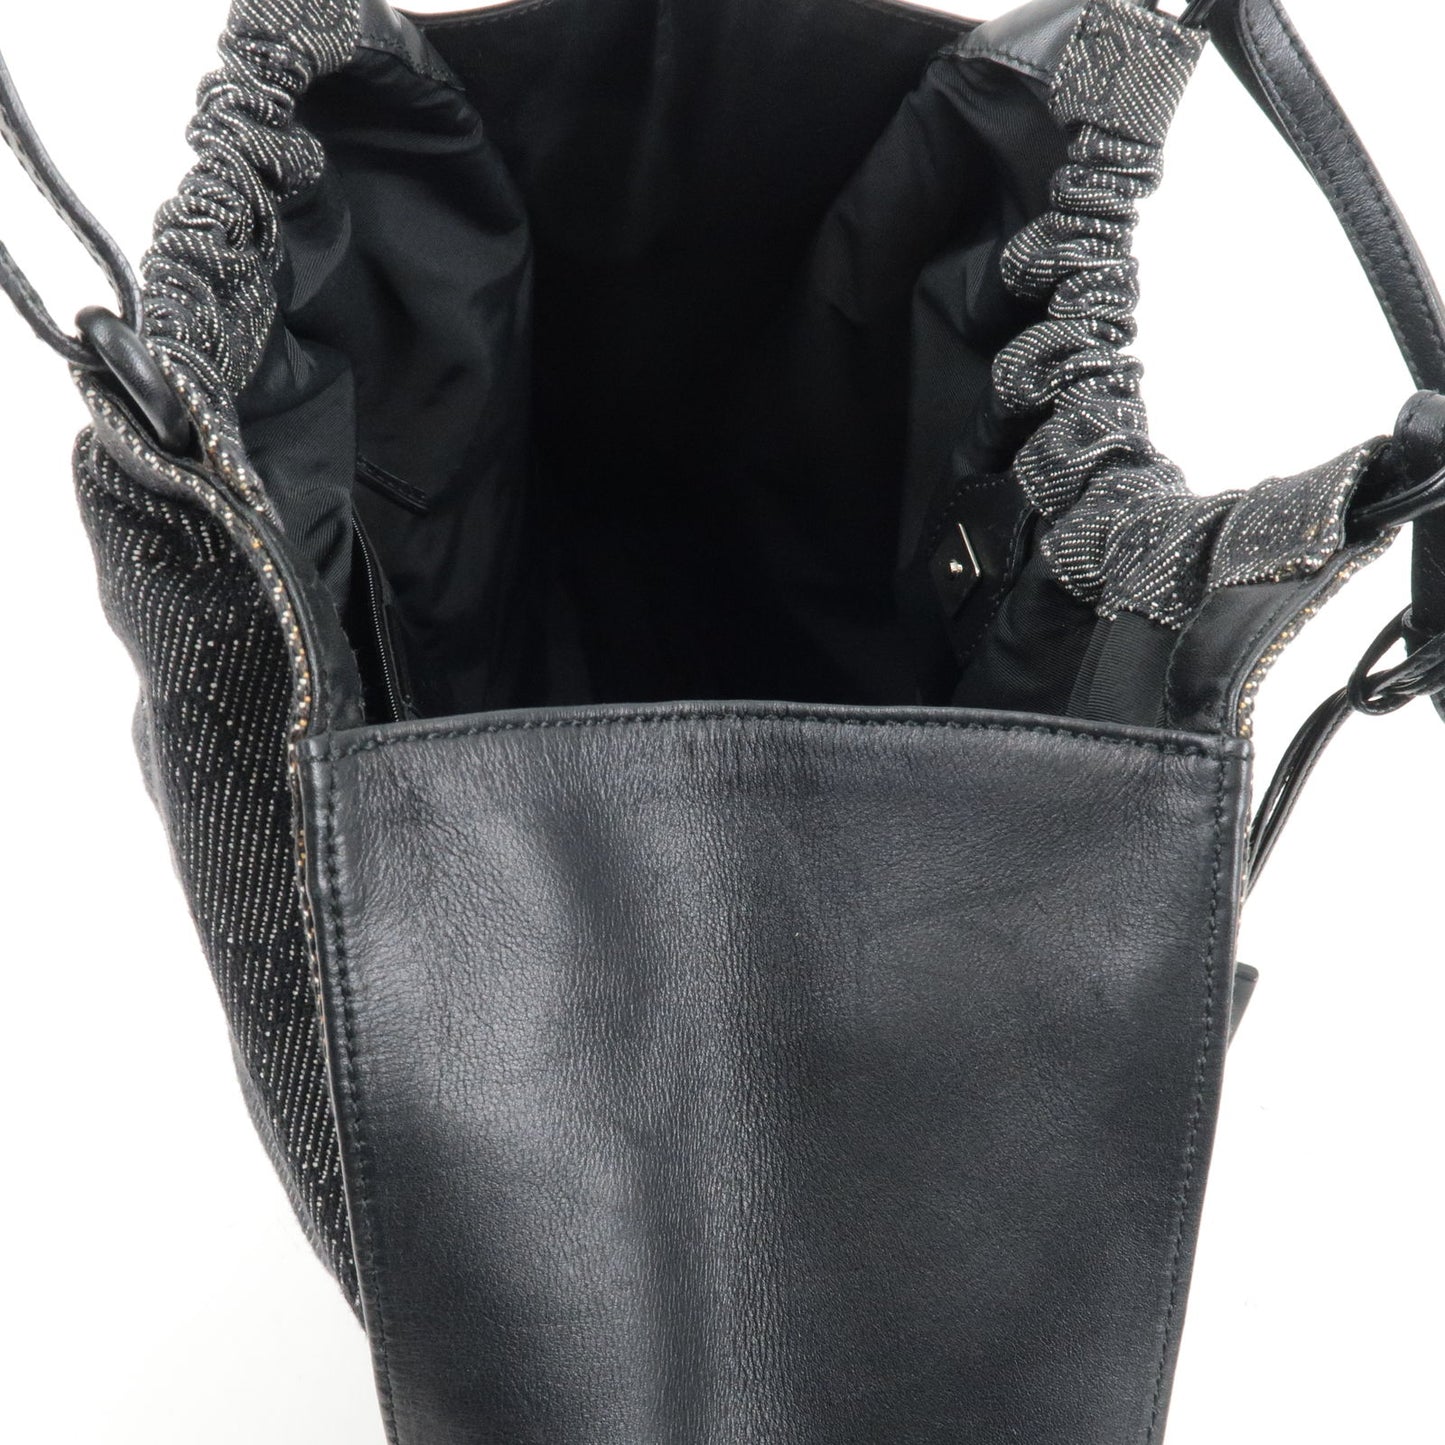 GUCCI GG Canvas Leather Hand Bag Purse Black 76554